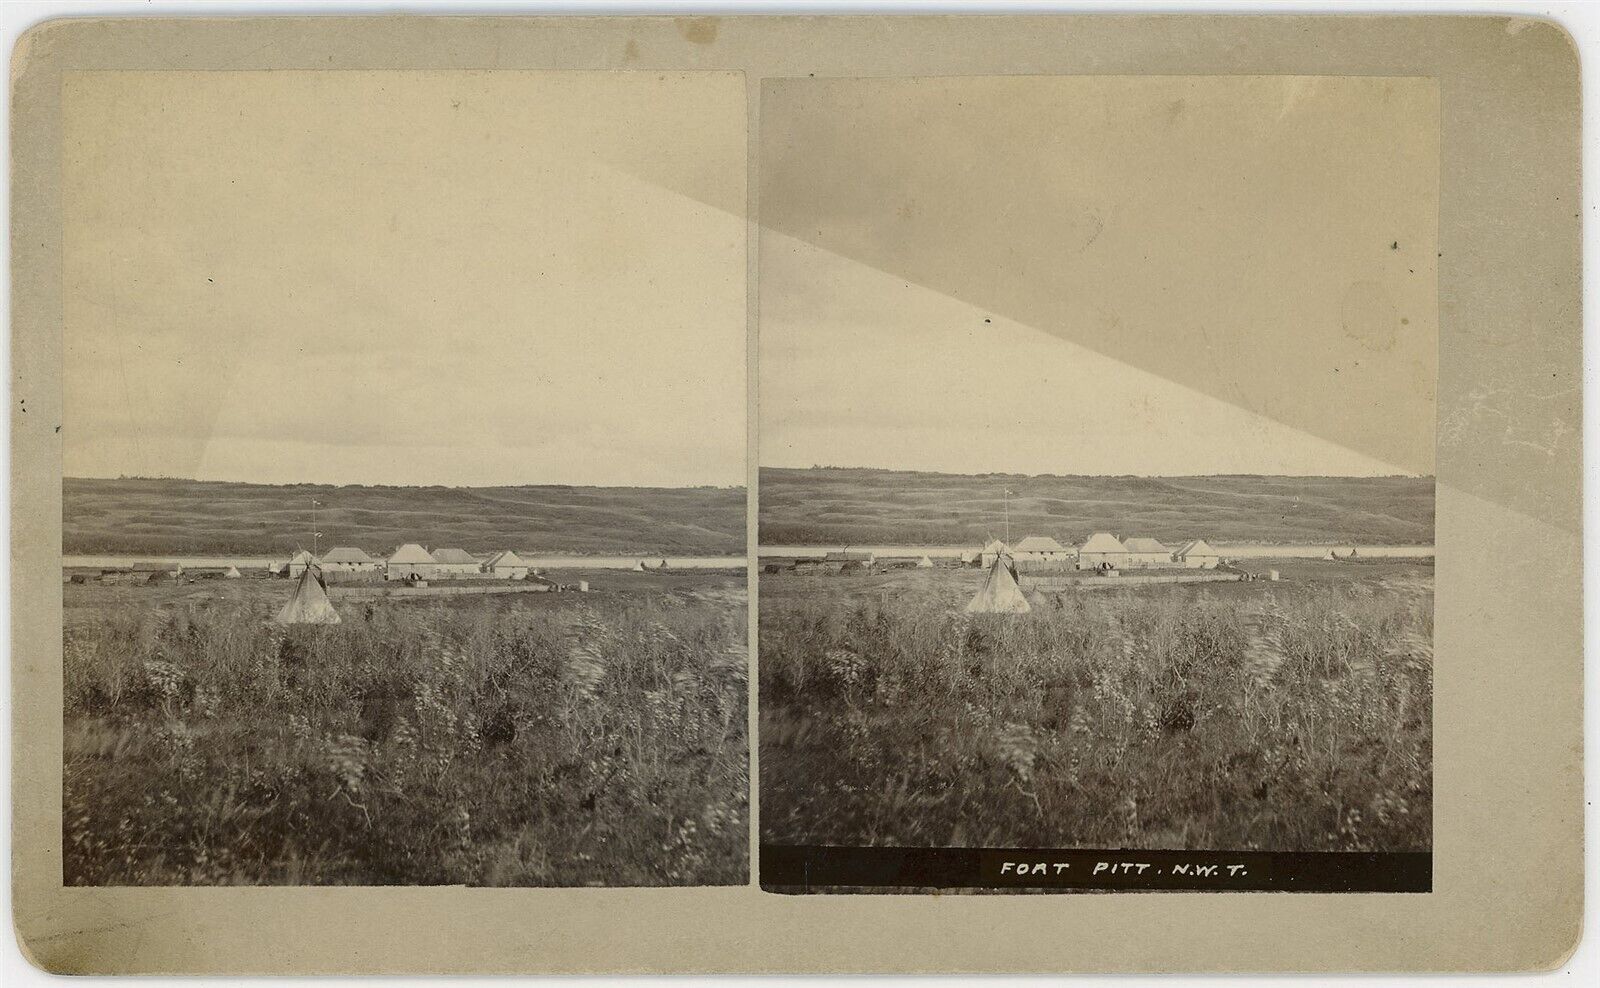 CANADA SV - Saskatchewan - Fort Pitt Trading Post - 1870s VERY RARE